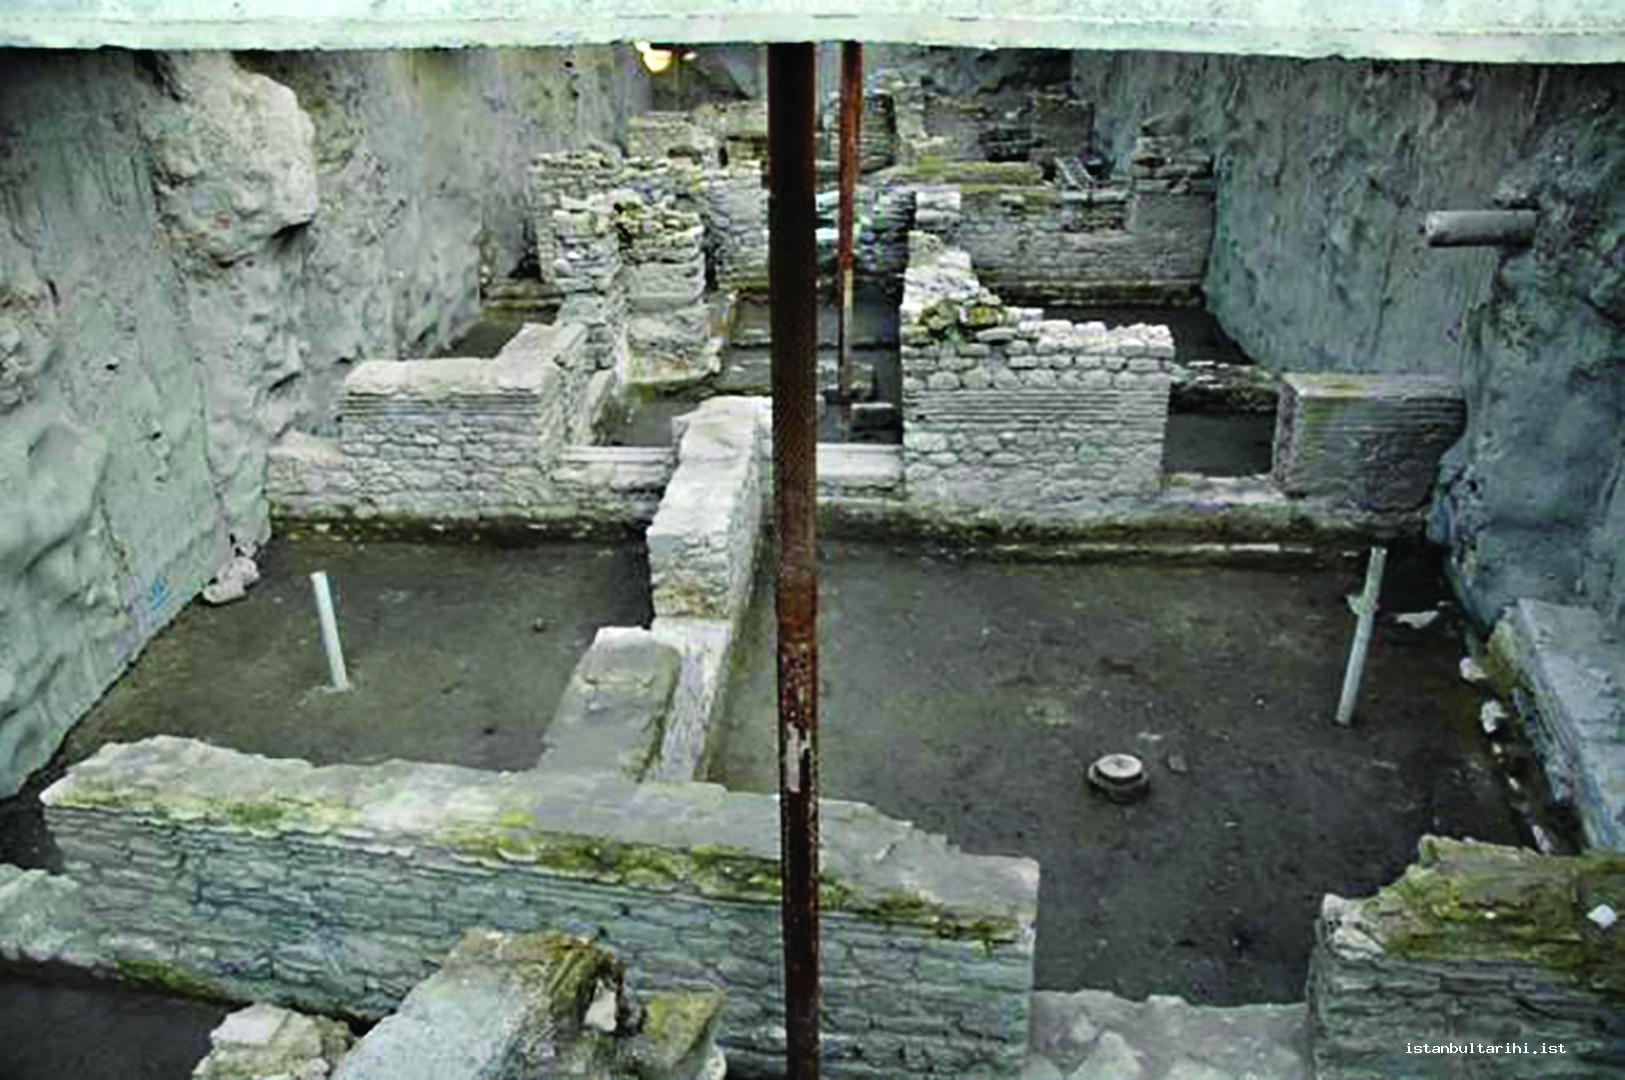 51- North entrance excavation area, Byzantium architecture